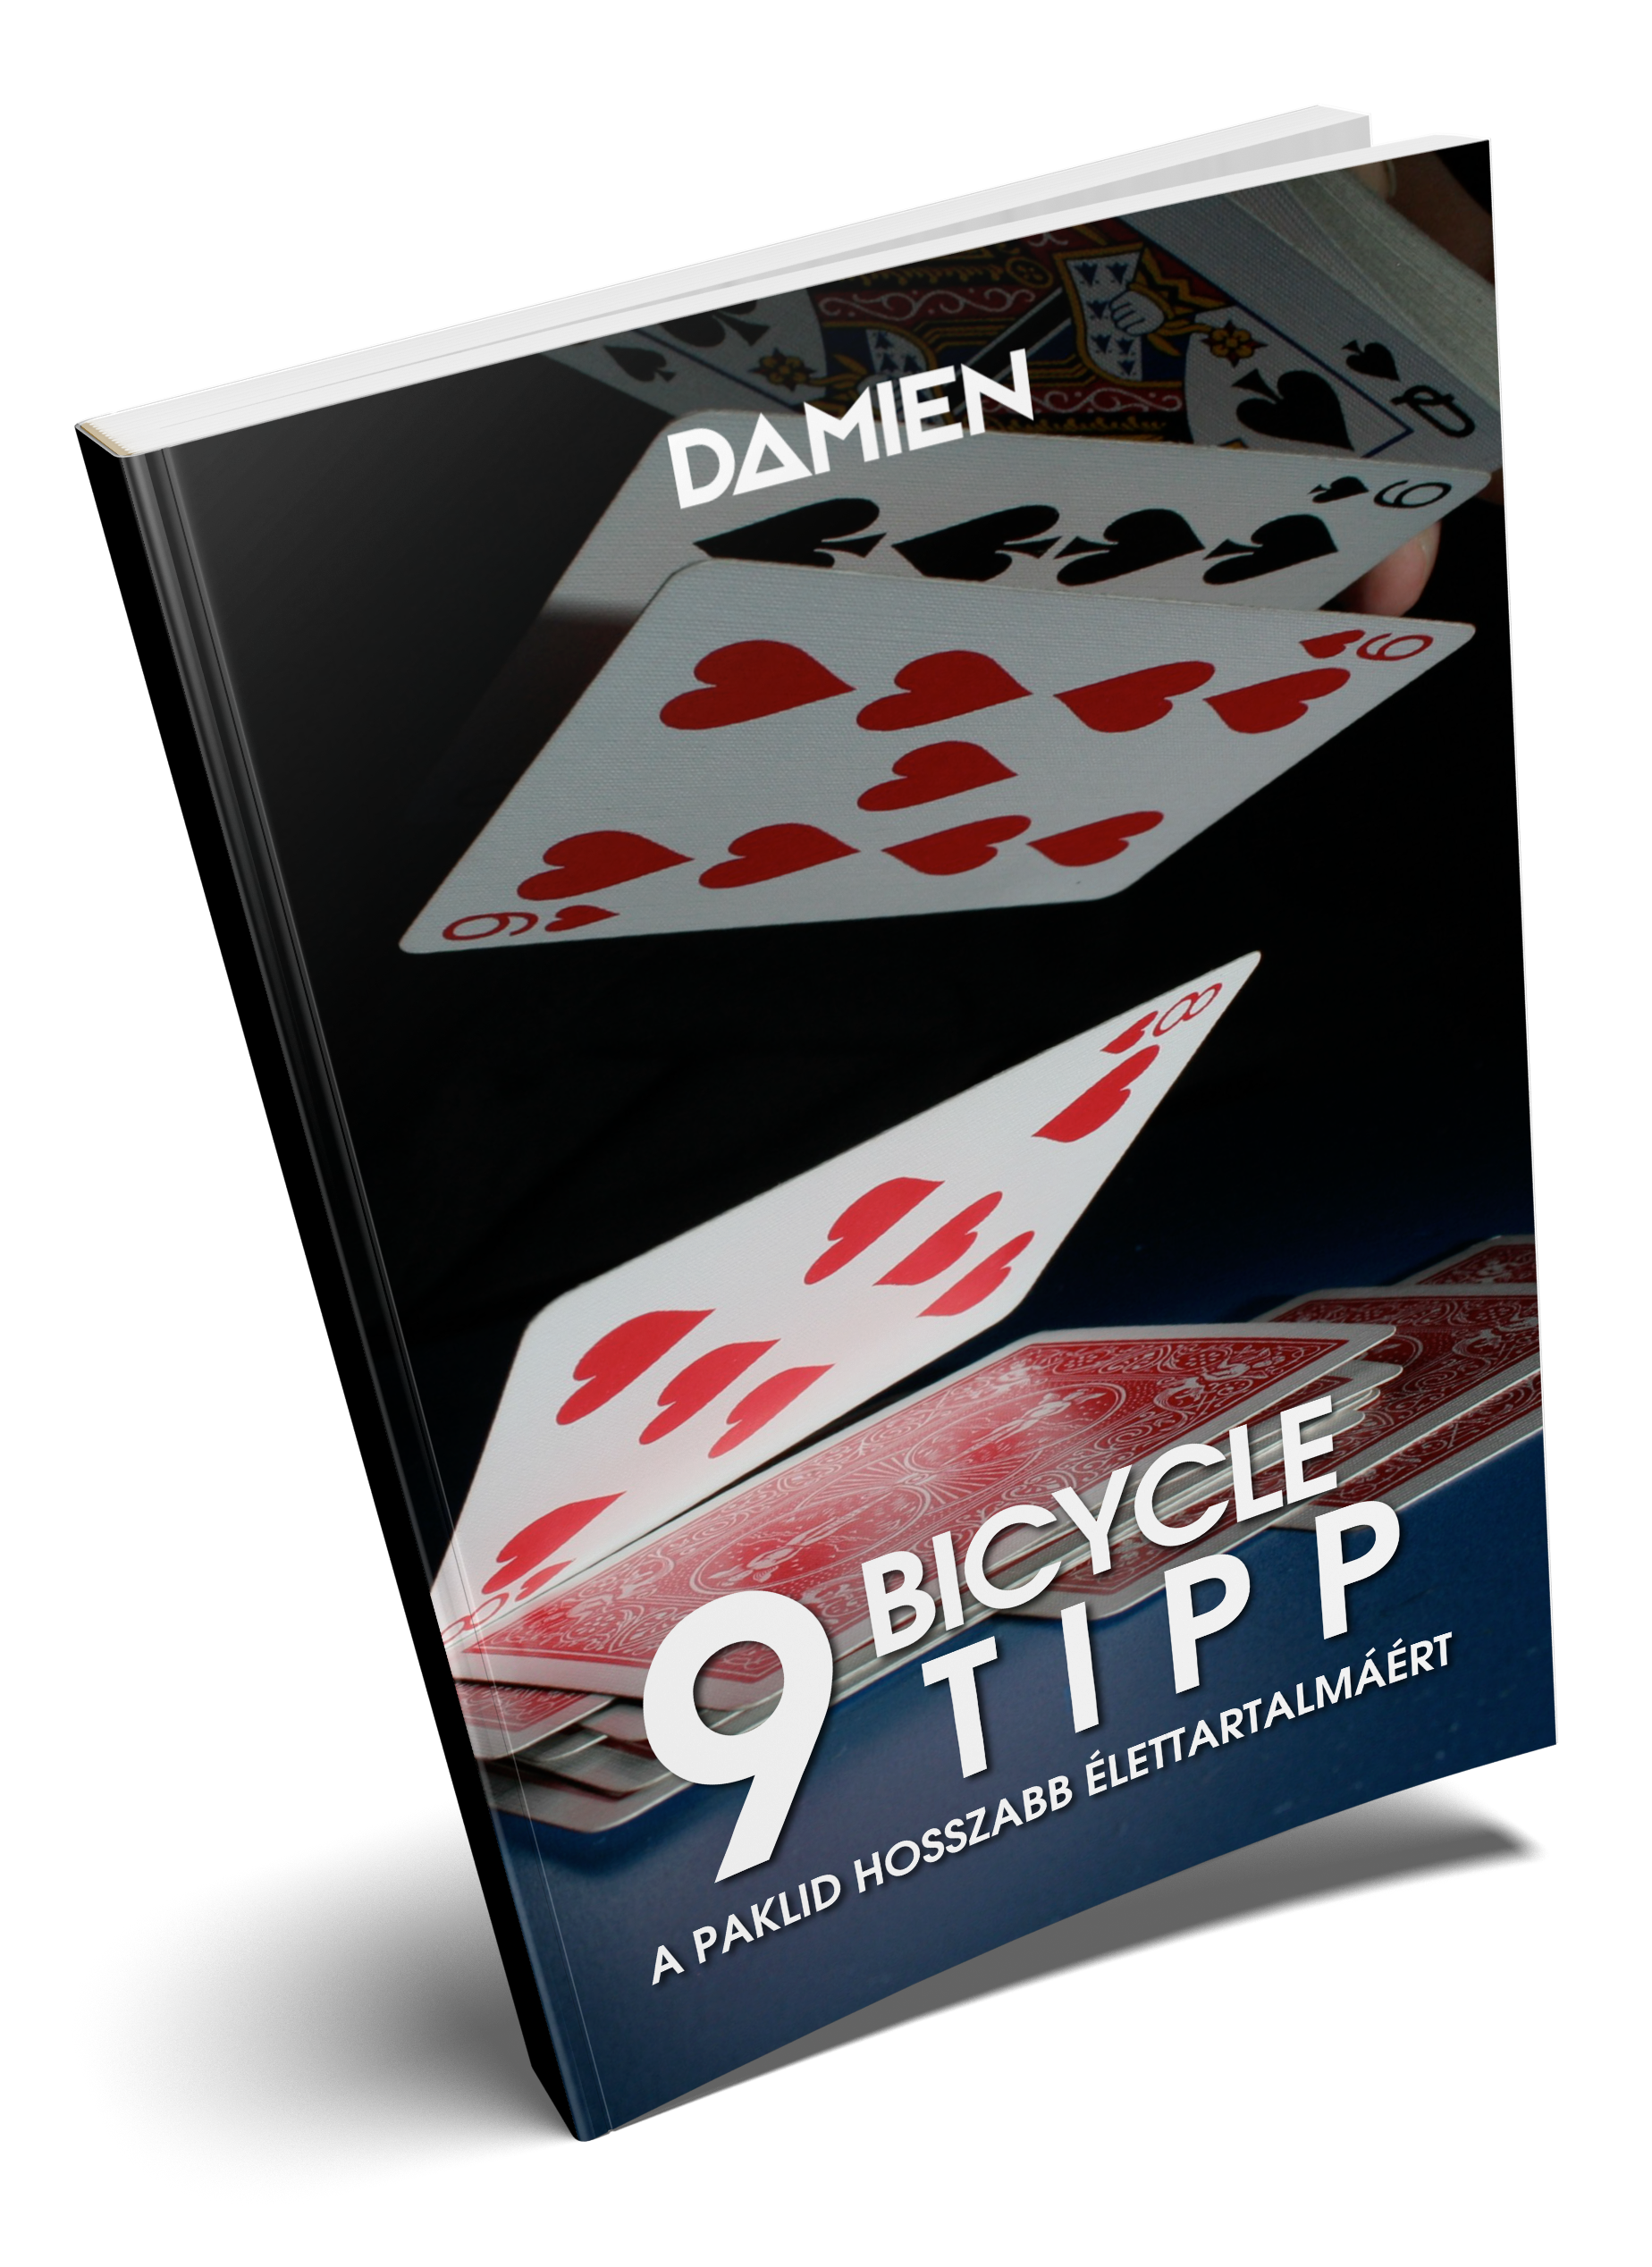 9 Bicycle tipp